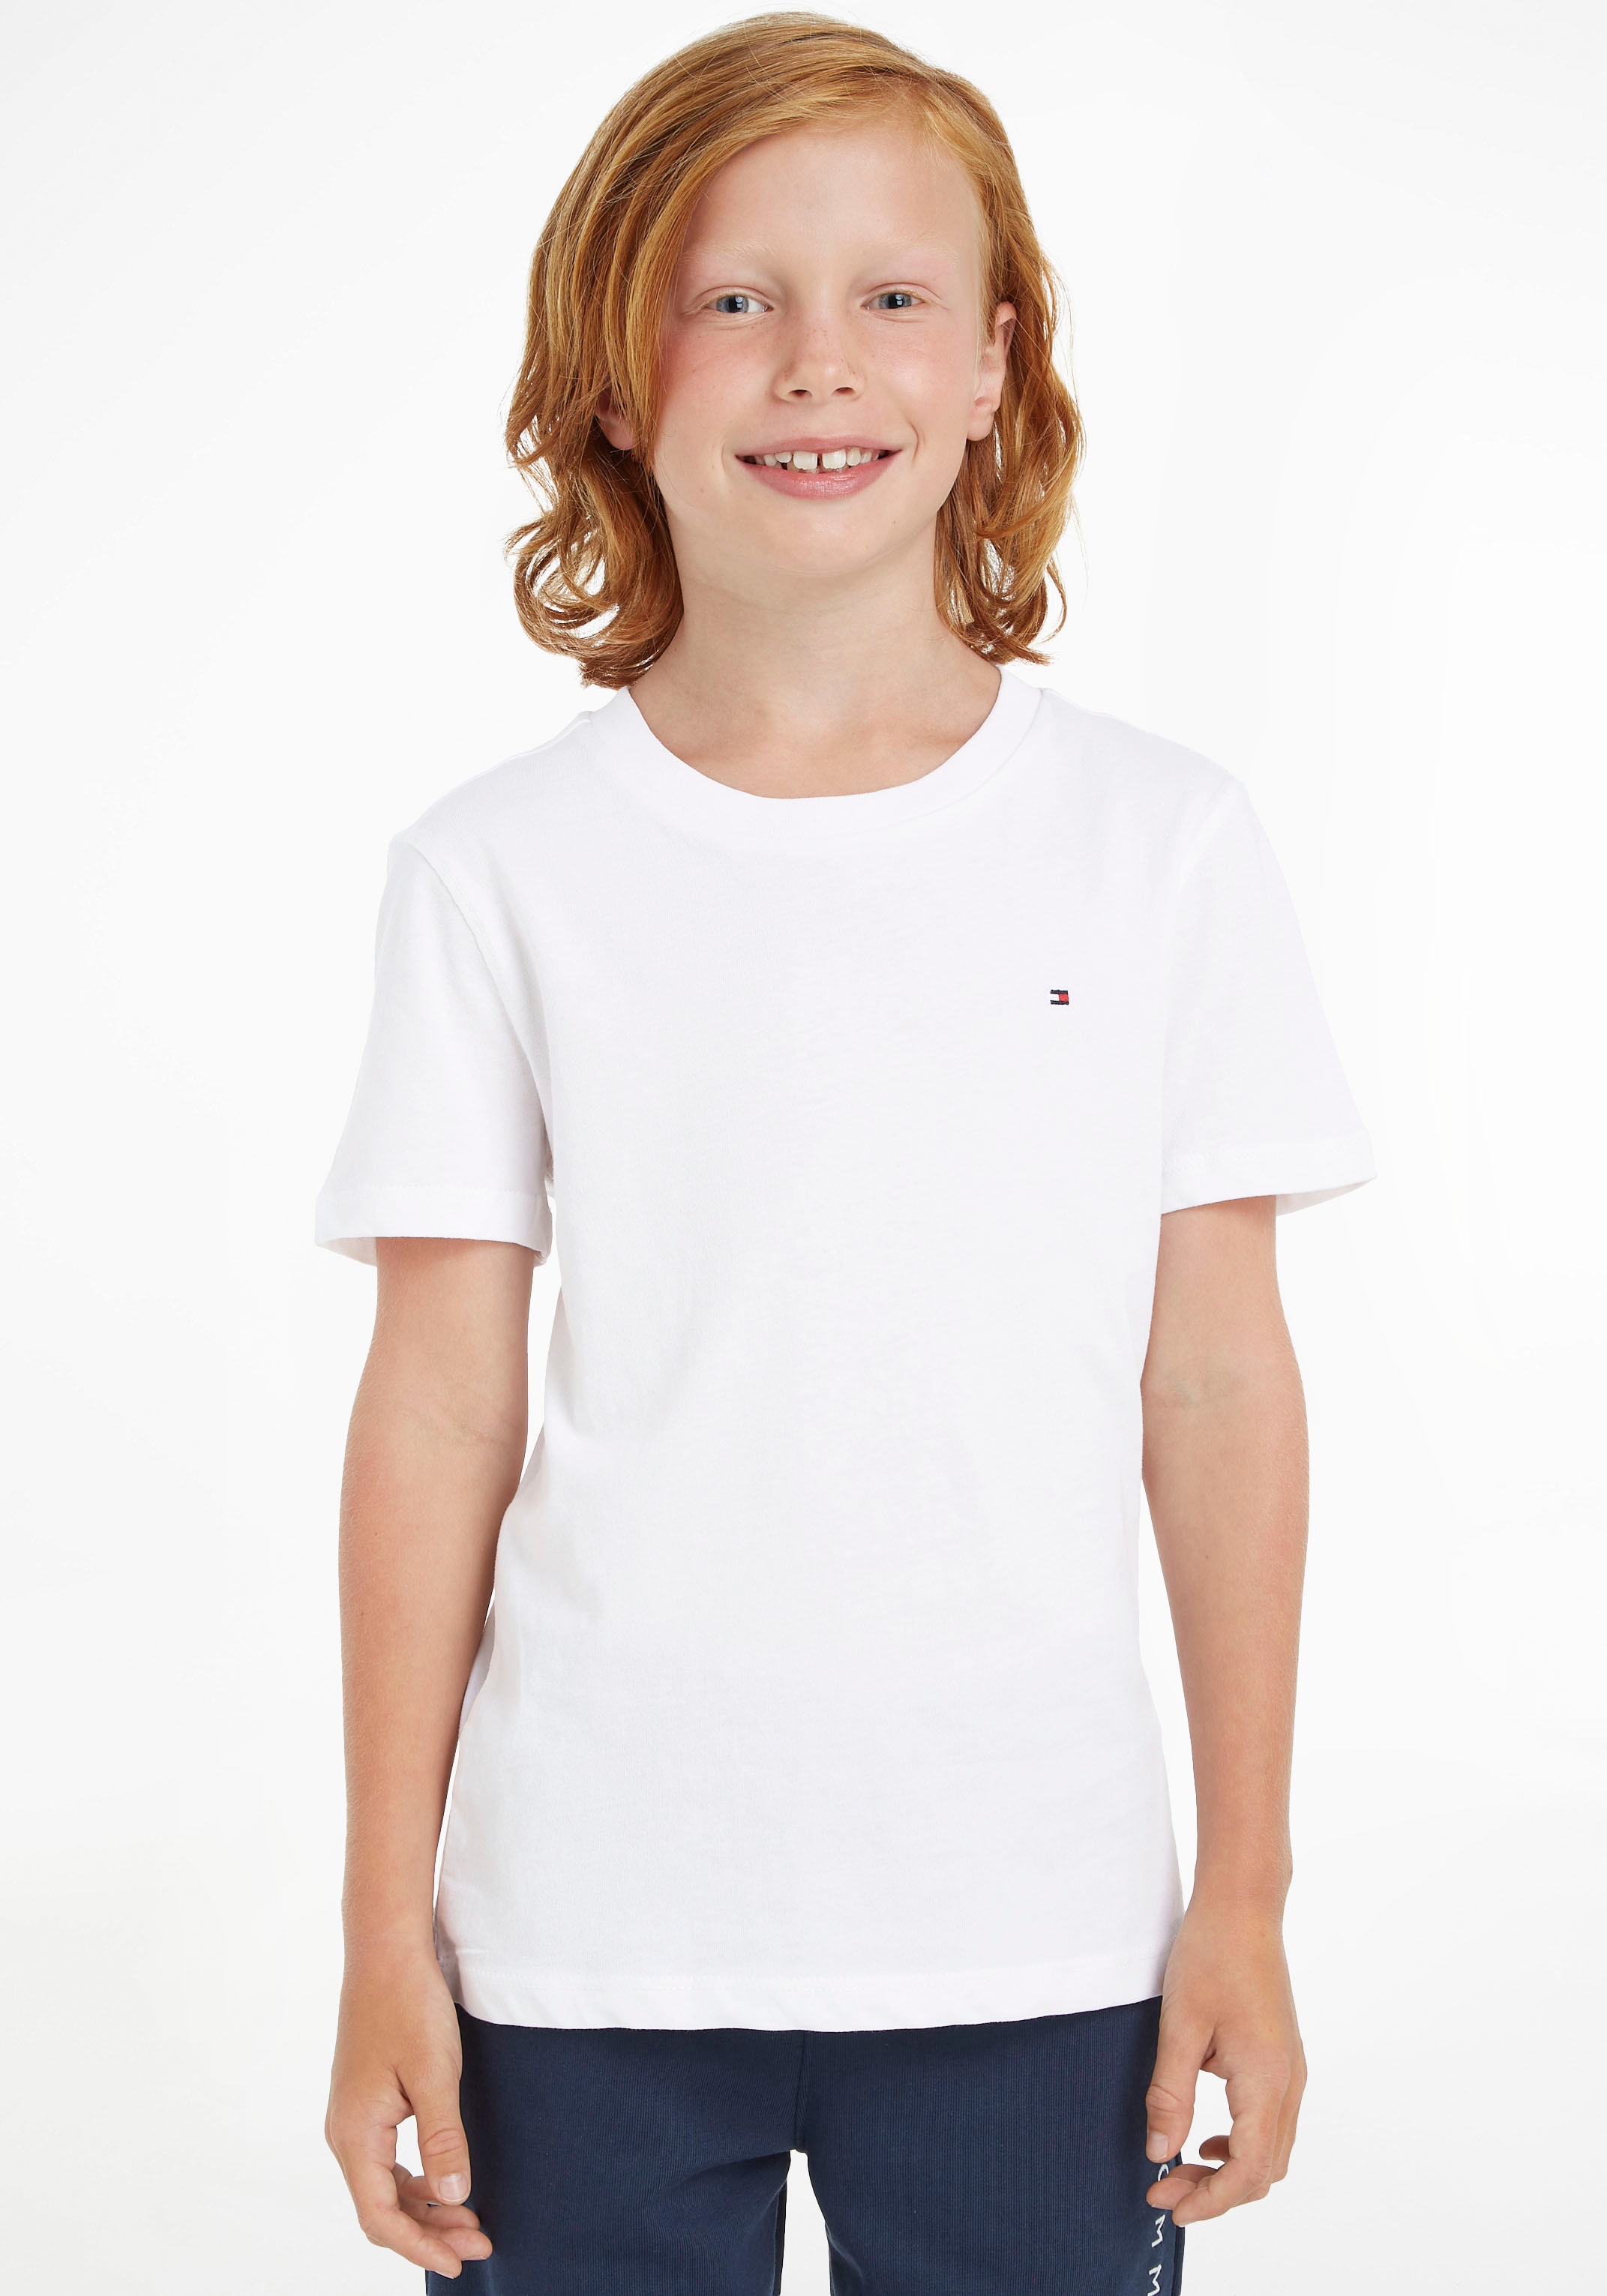 T-Shirt Tommy Kinder Hilfiger Junior »BOYS BASIC KNIT«, CN Kids bestellen MiniMe